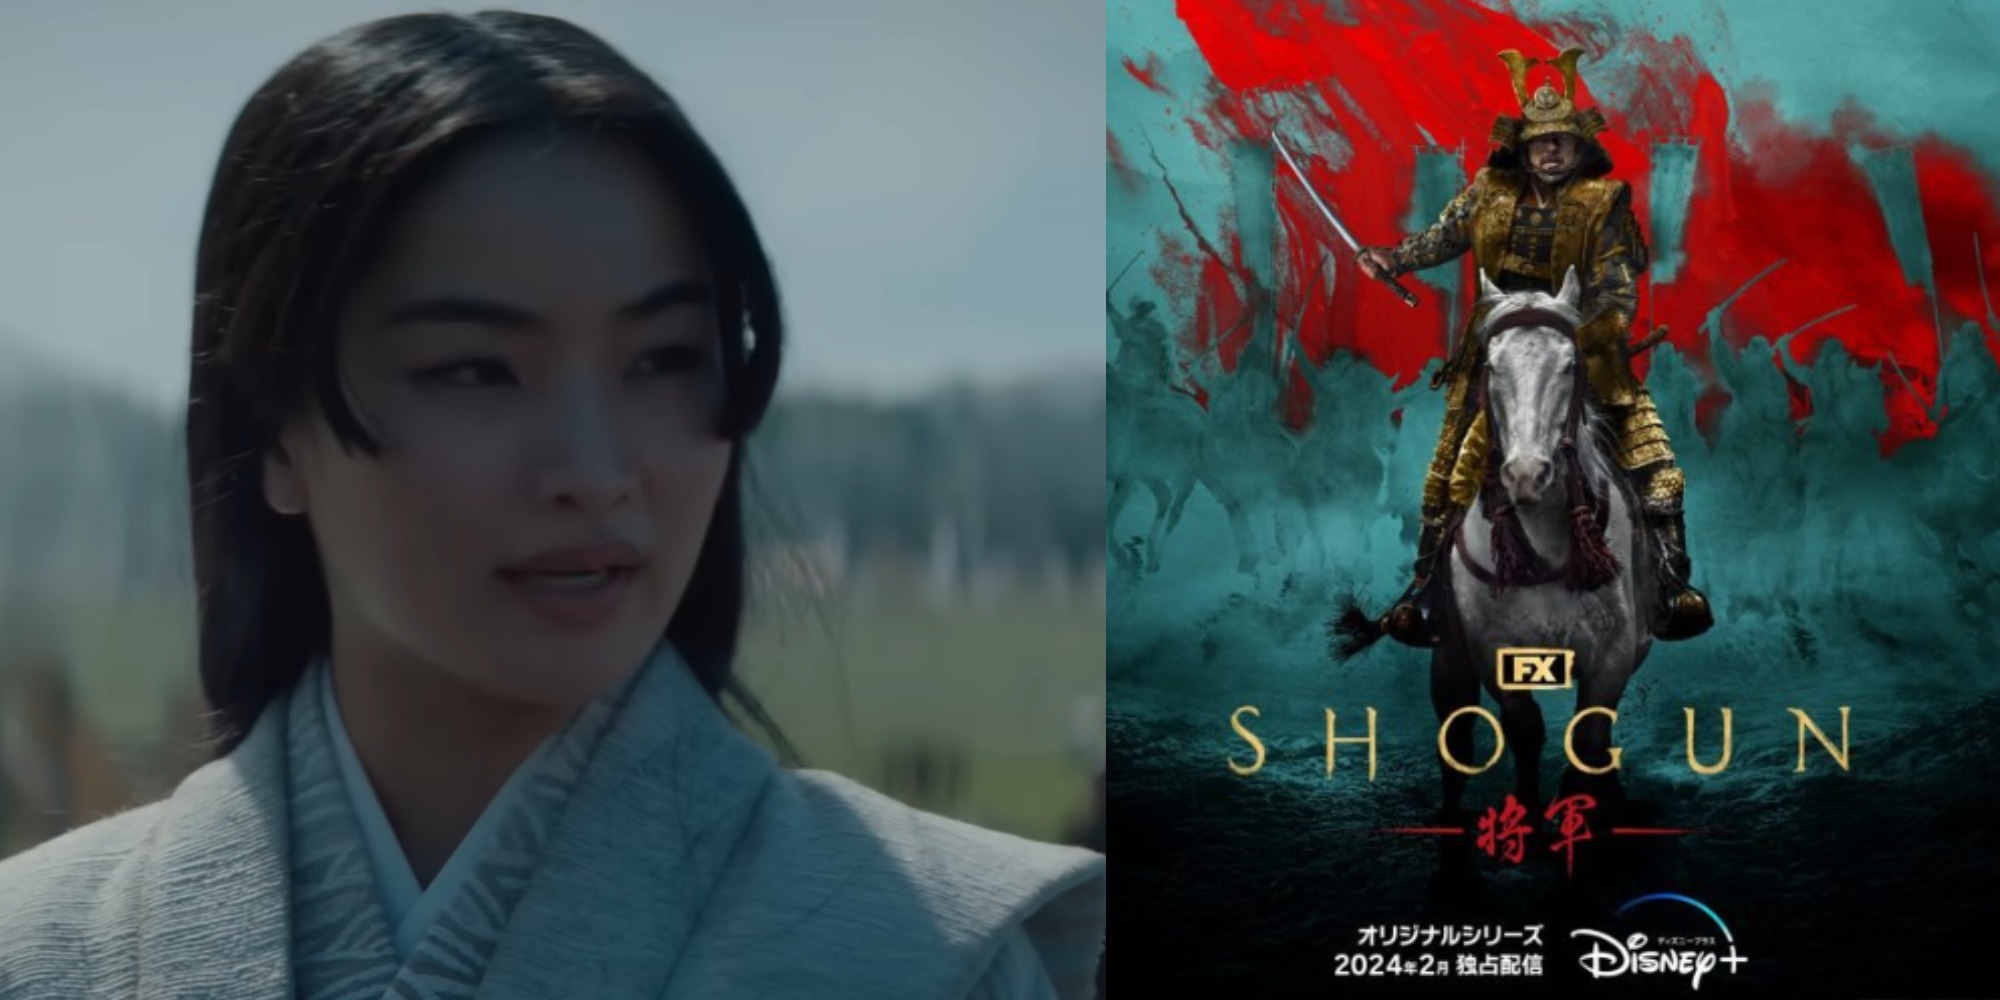 Shogun Episode 8: Release Date, Preview & Spoilers